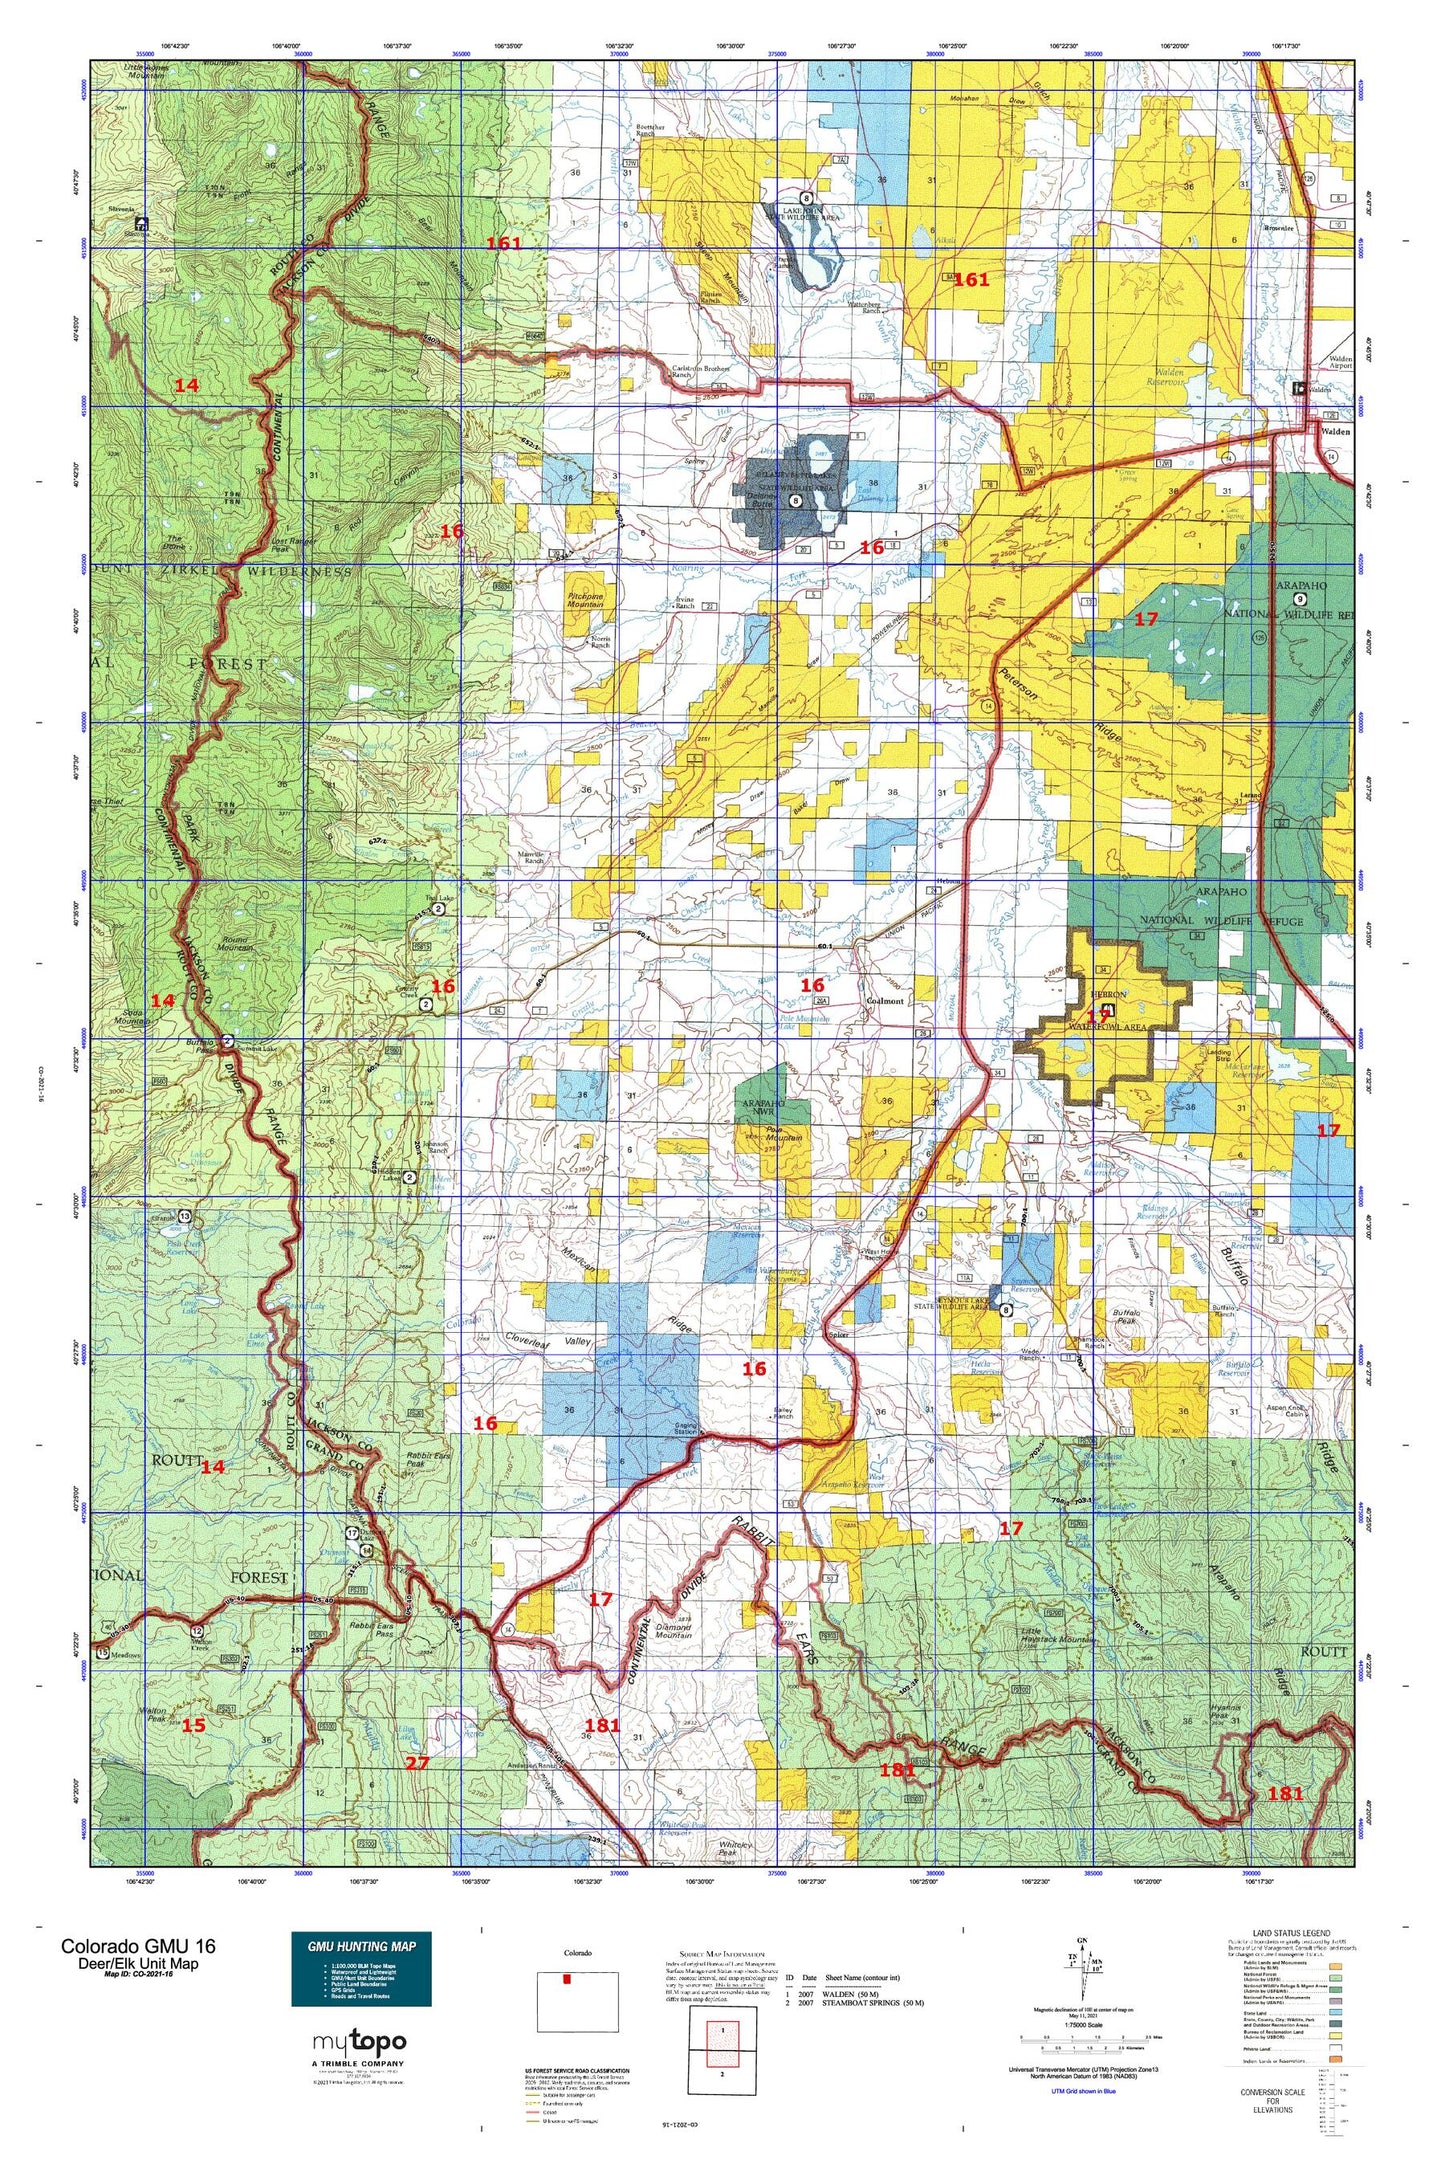 Colorado GMU 16 Map Image